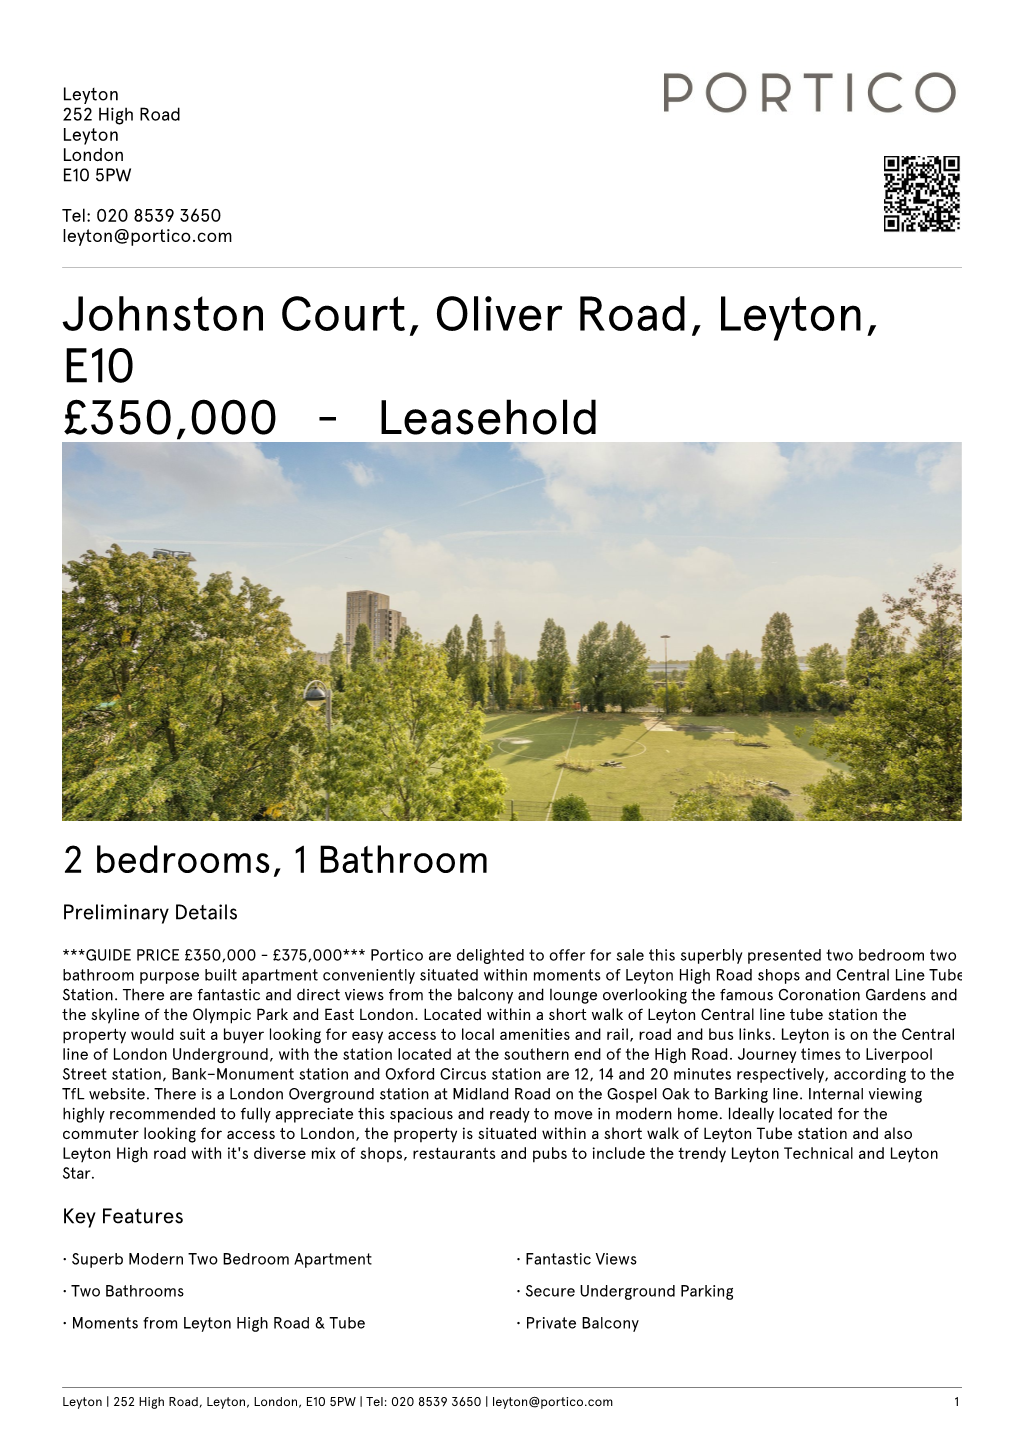 Johnston Court, Oliver Road, Leyton, E10 £350000